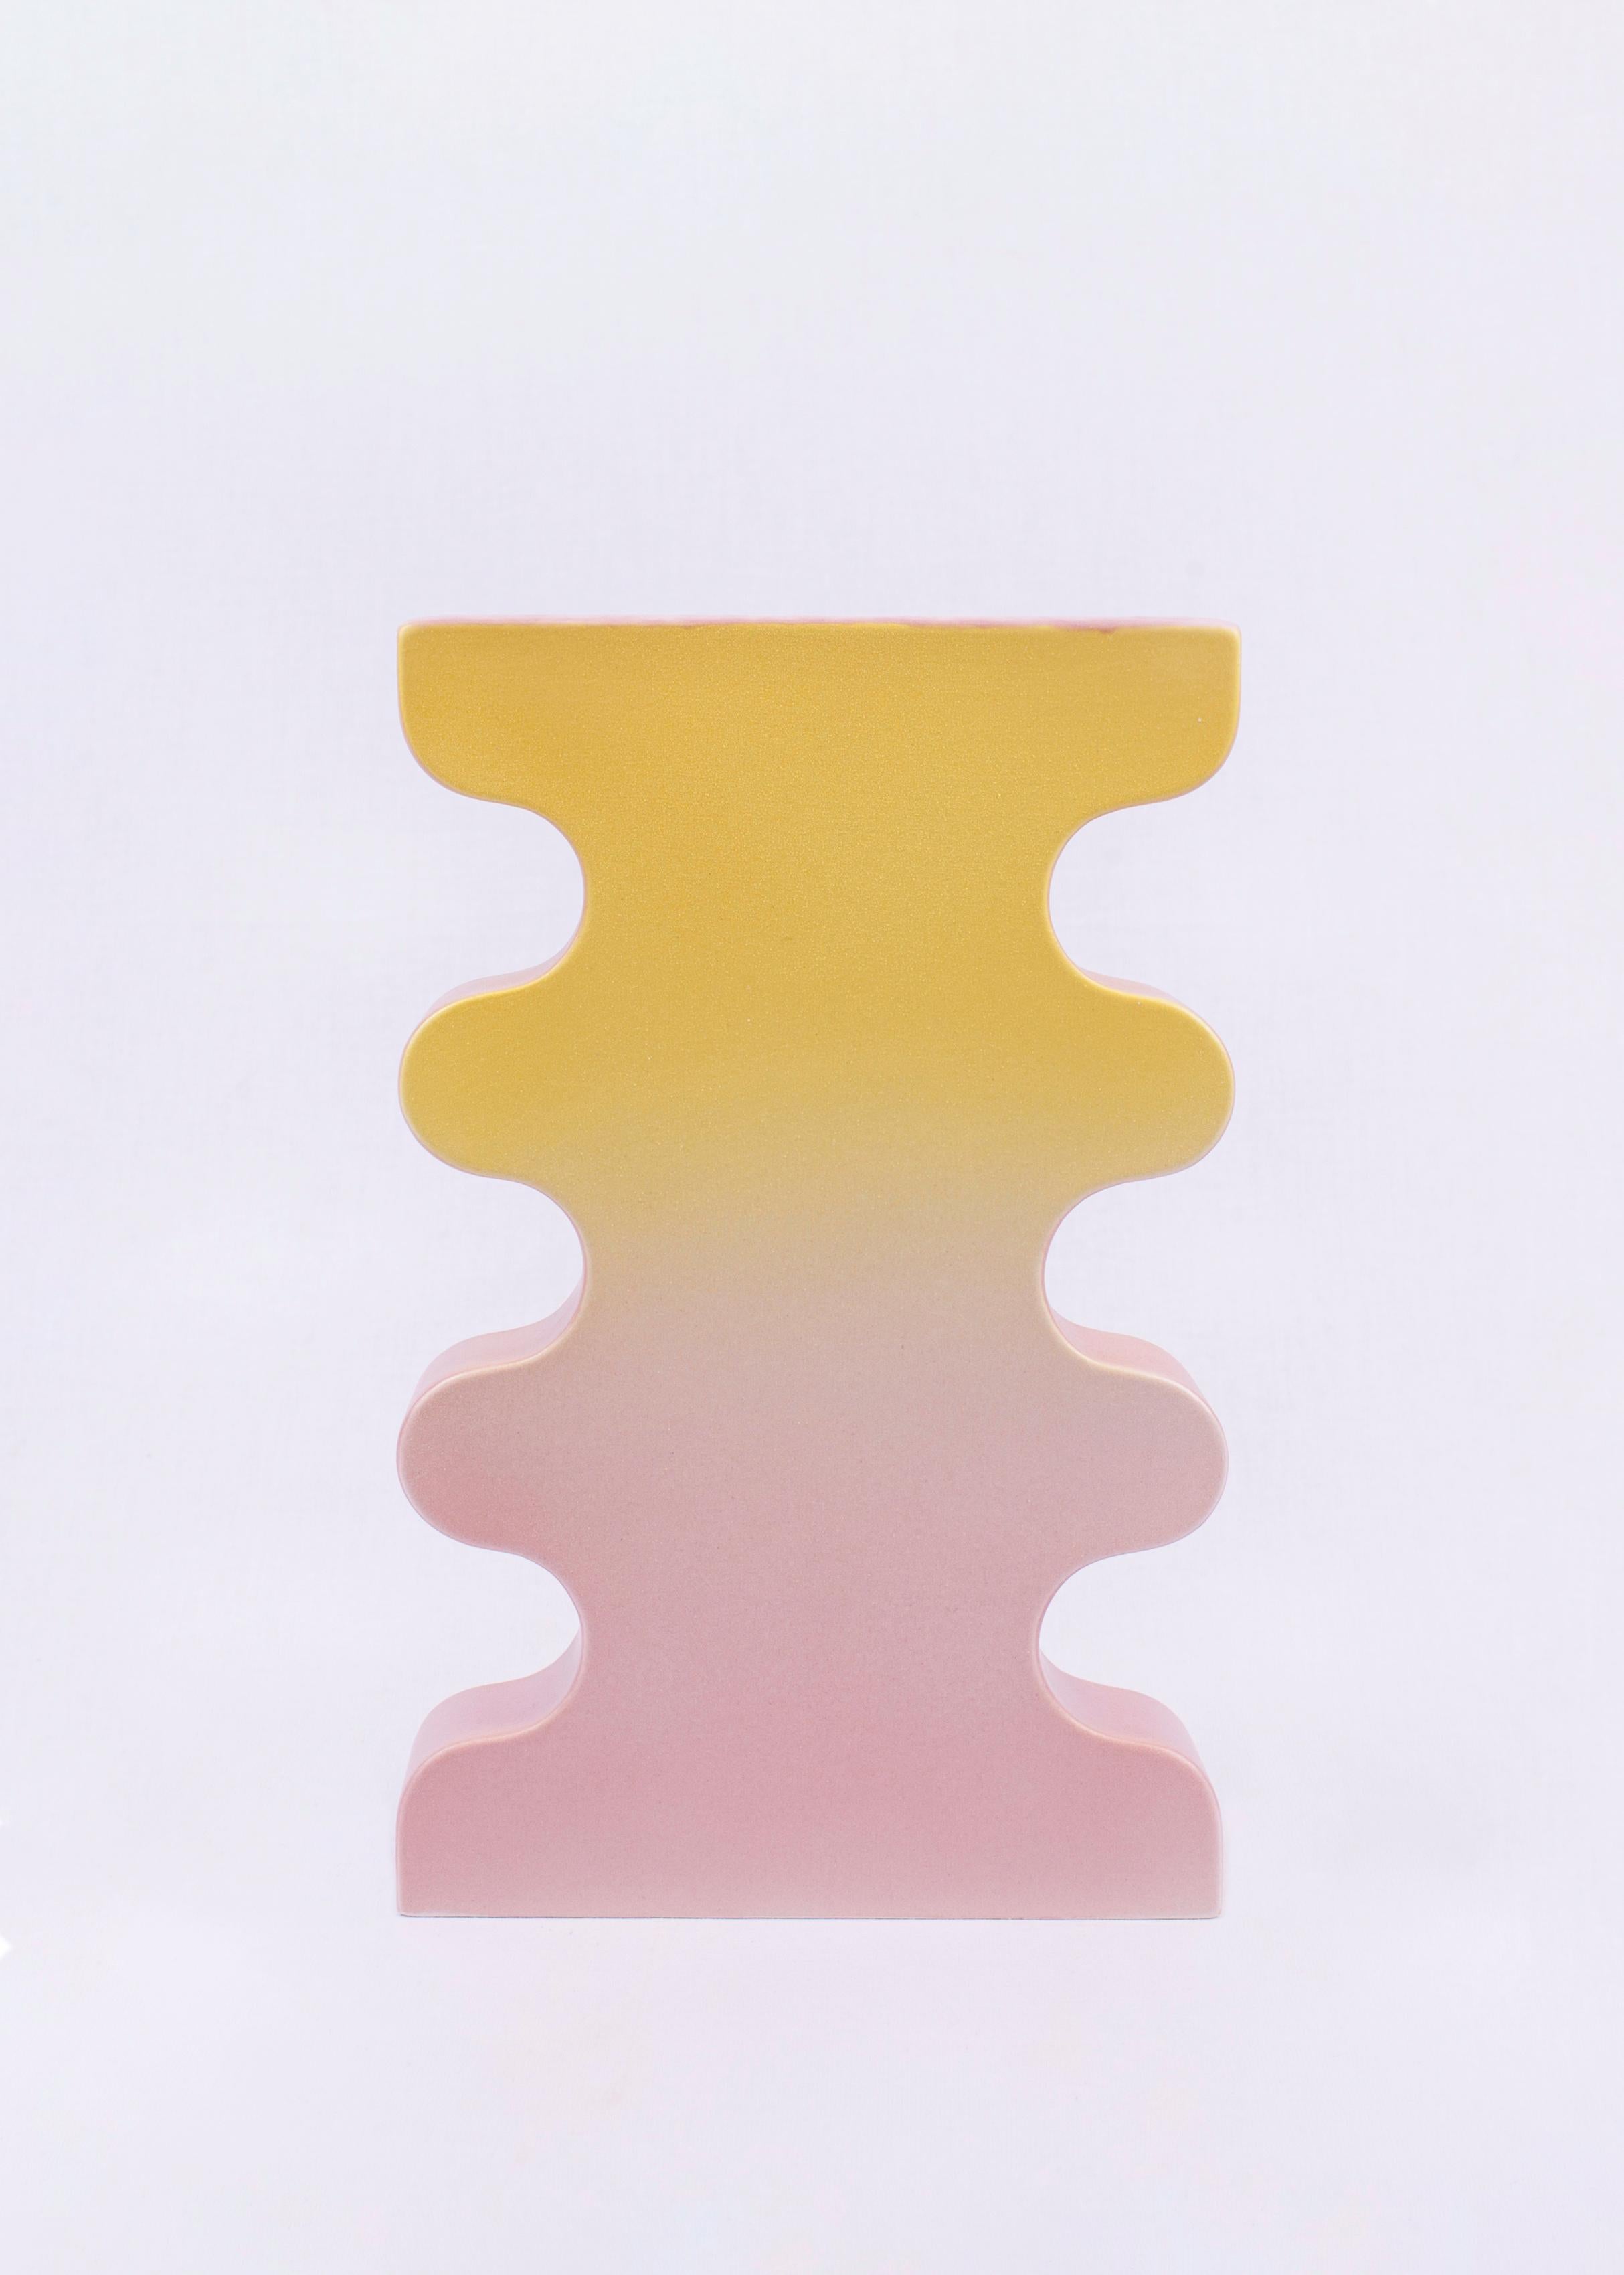 Organic Modern Contemporary Ceramic Vase 'Barva 4', Yellow + Lila For Sale